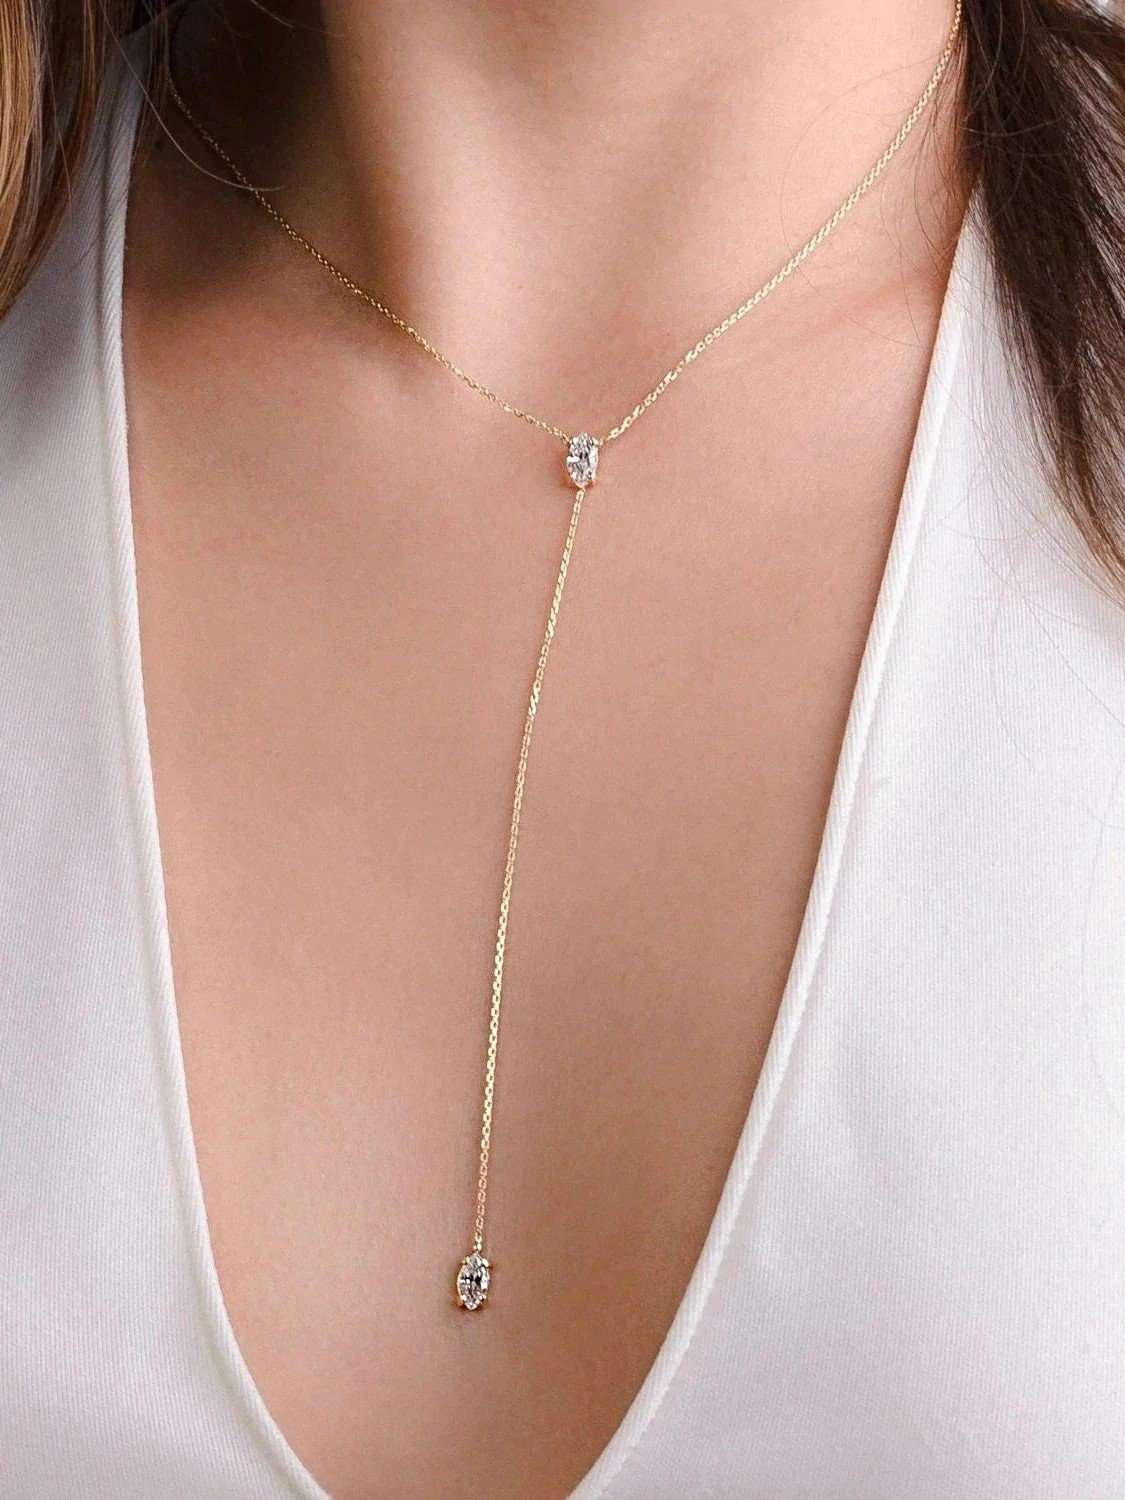 Greta Necklace - 24K Gold PlatedBackUpItemsCute Lariat NecklaceLunai Jewelry